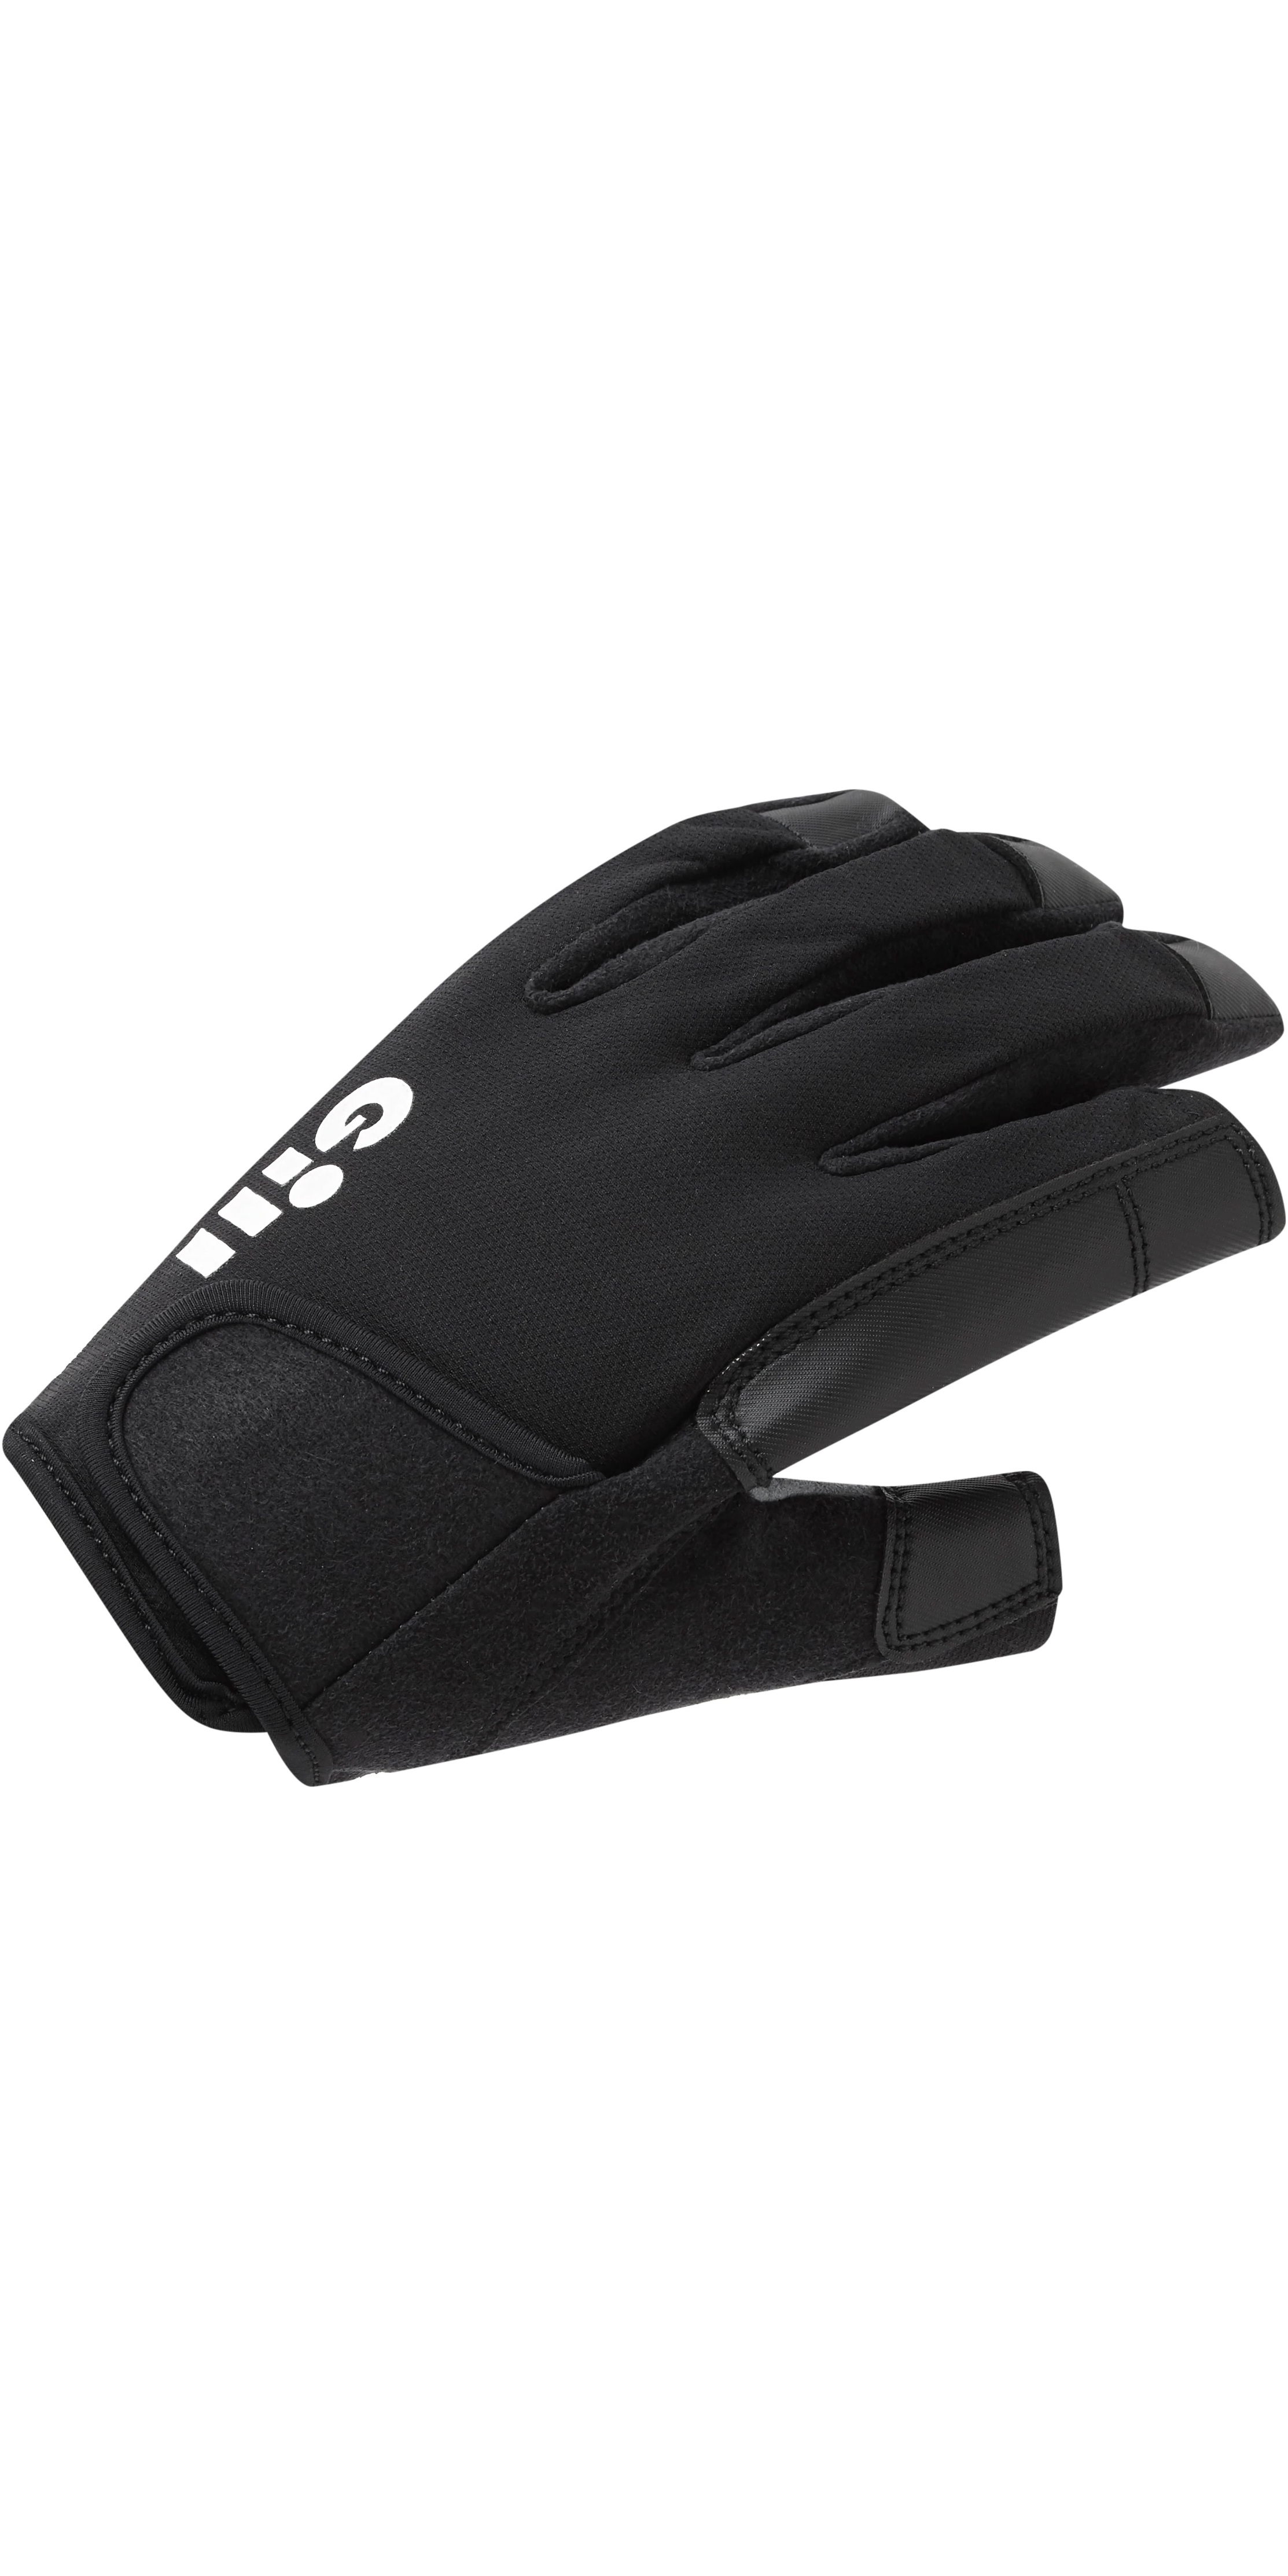 https://cdn.wetsuitoutlet.co.uk/images/Gill-Mens-Championship-Long-Finger-Sailing-Gloves-7253---Black%20Main.jpg?v=3